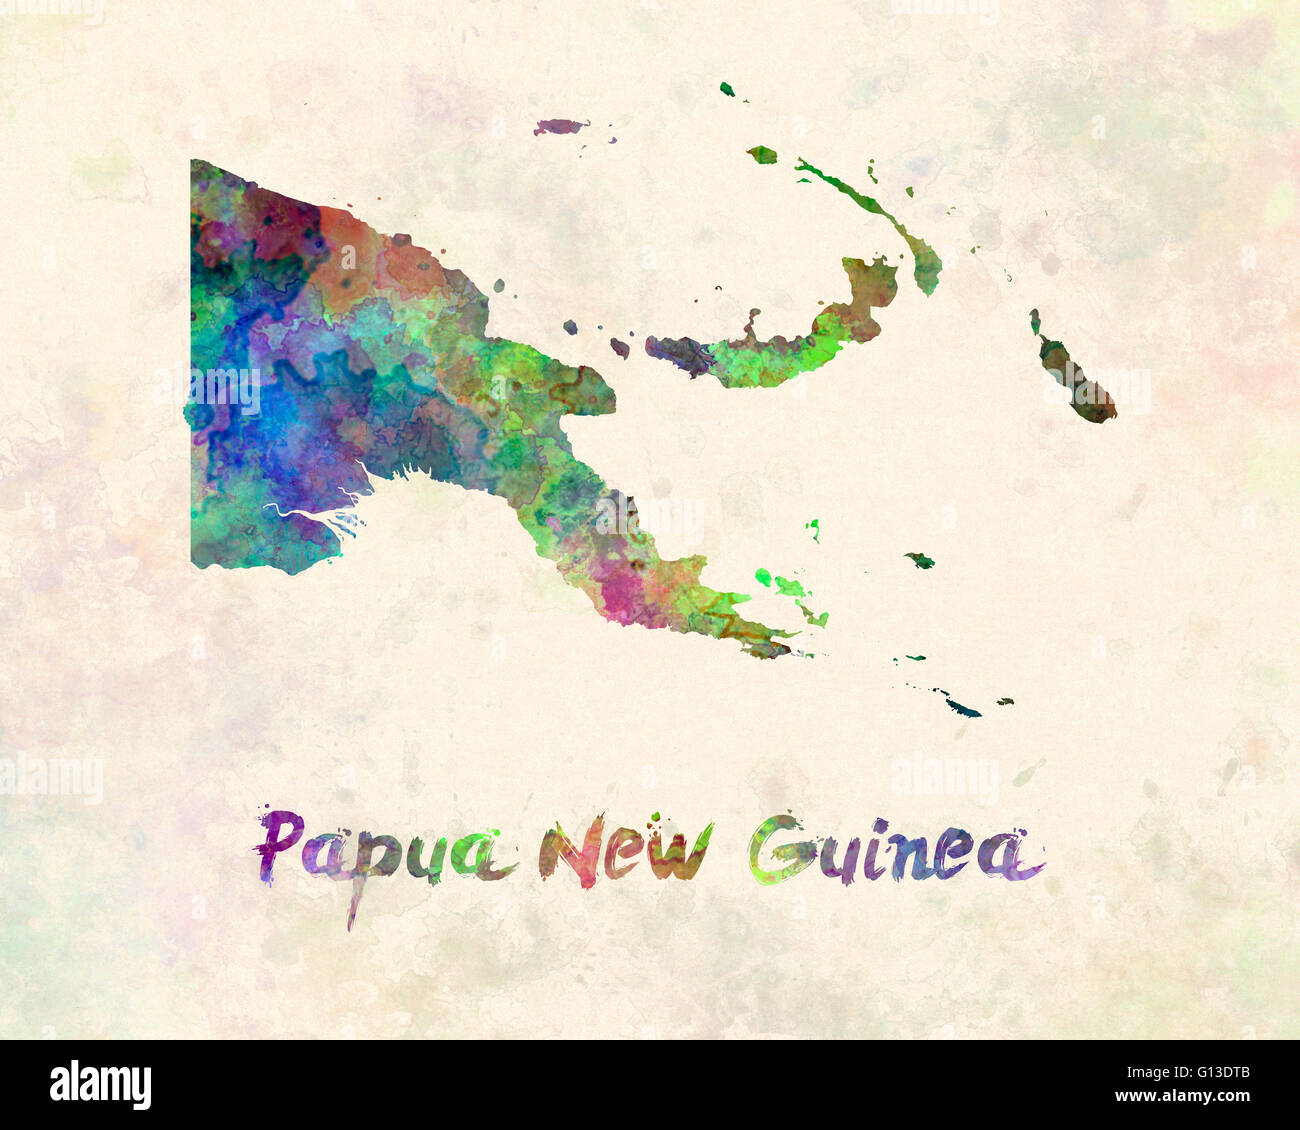 Papua New Guinea in watercolor Stock Photo